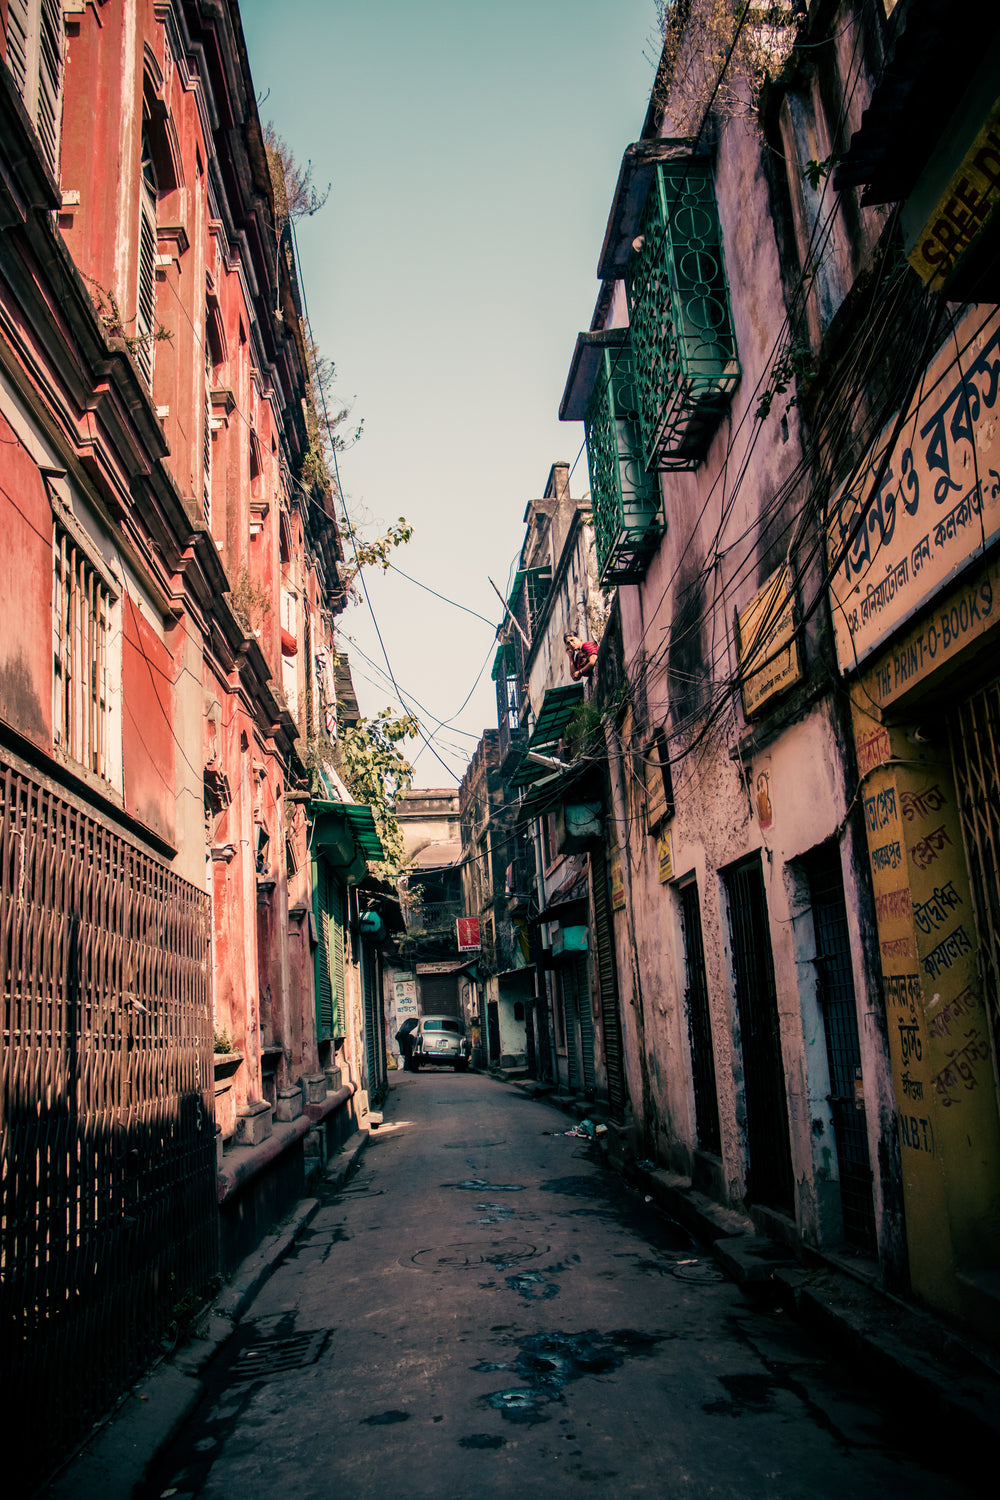 thin rustic alleyway with buildings each side